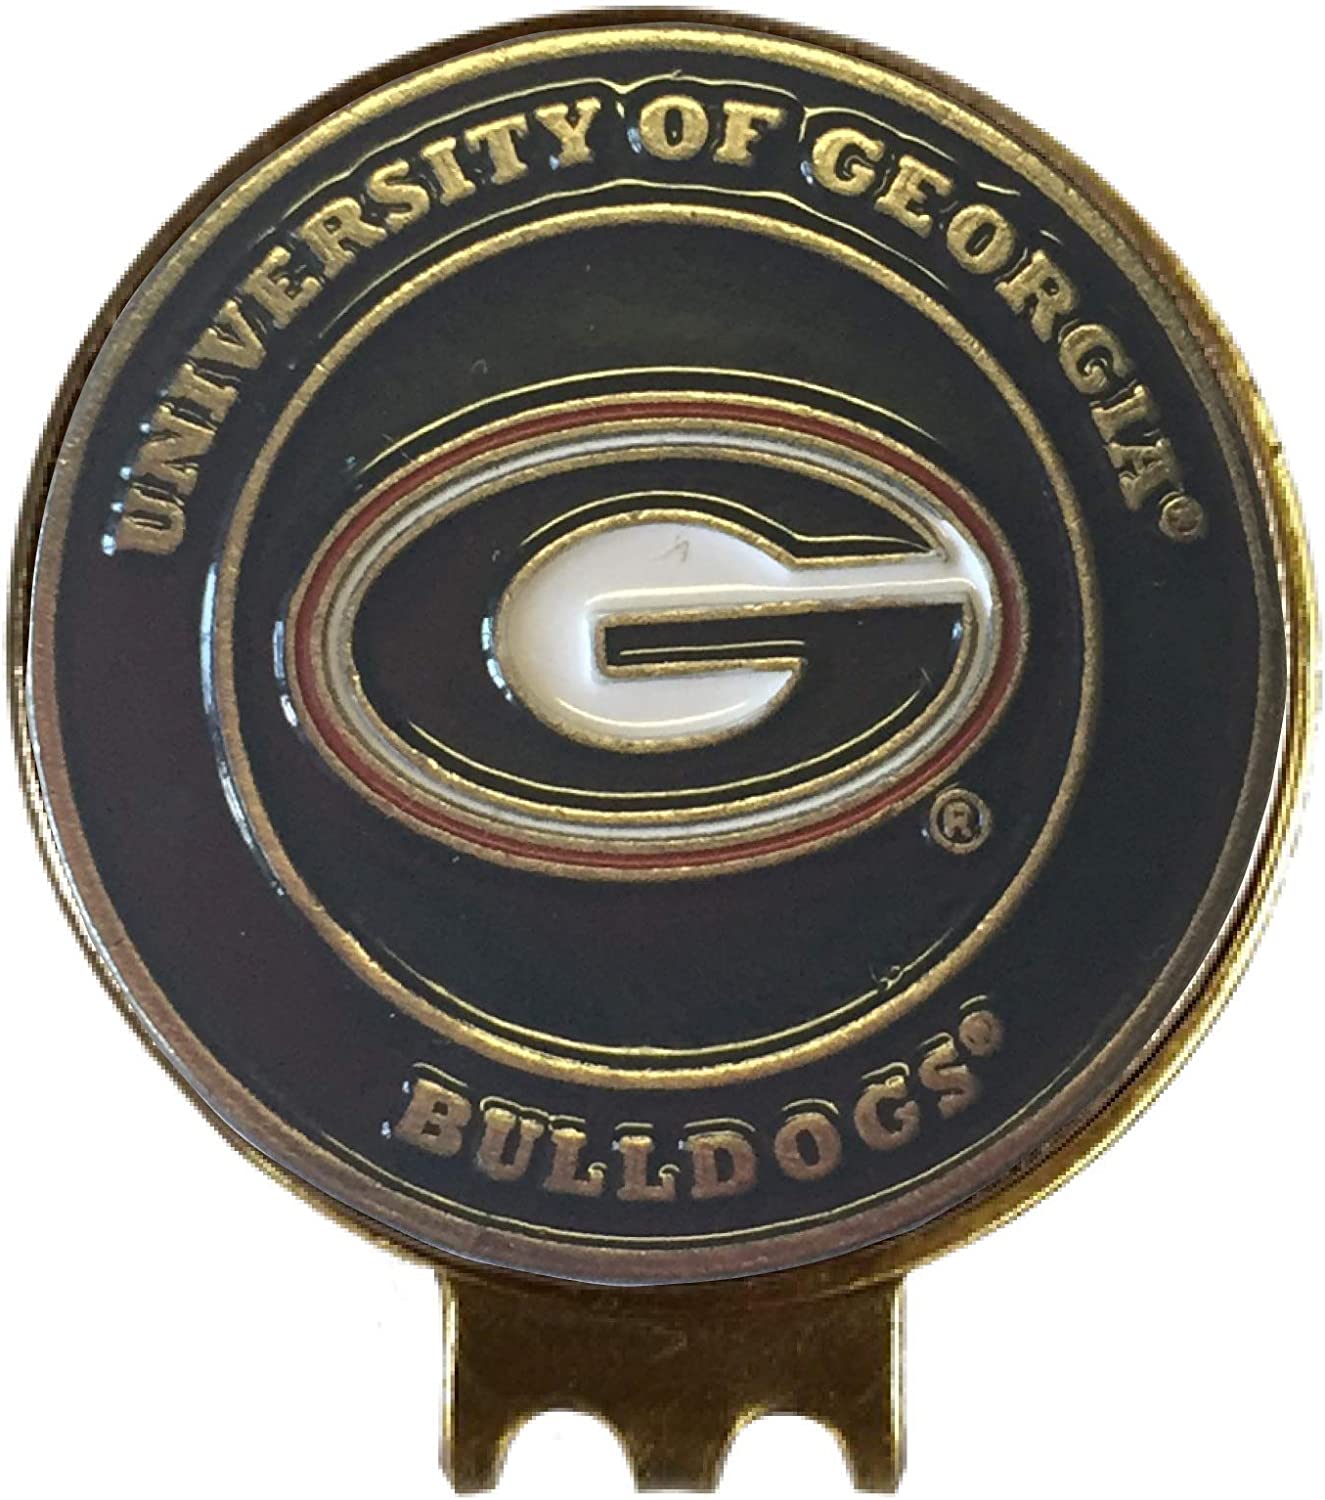 NCAA Golf Hat Clip (Georgia Bulldogs)